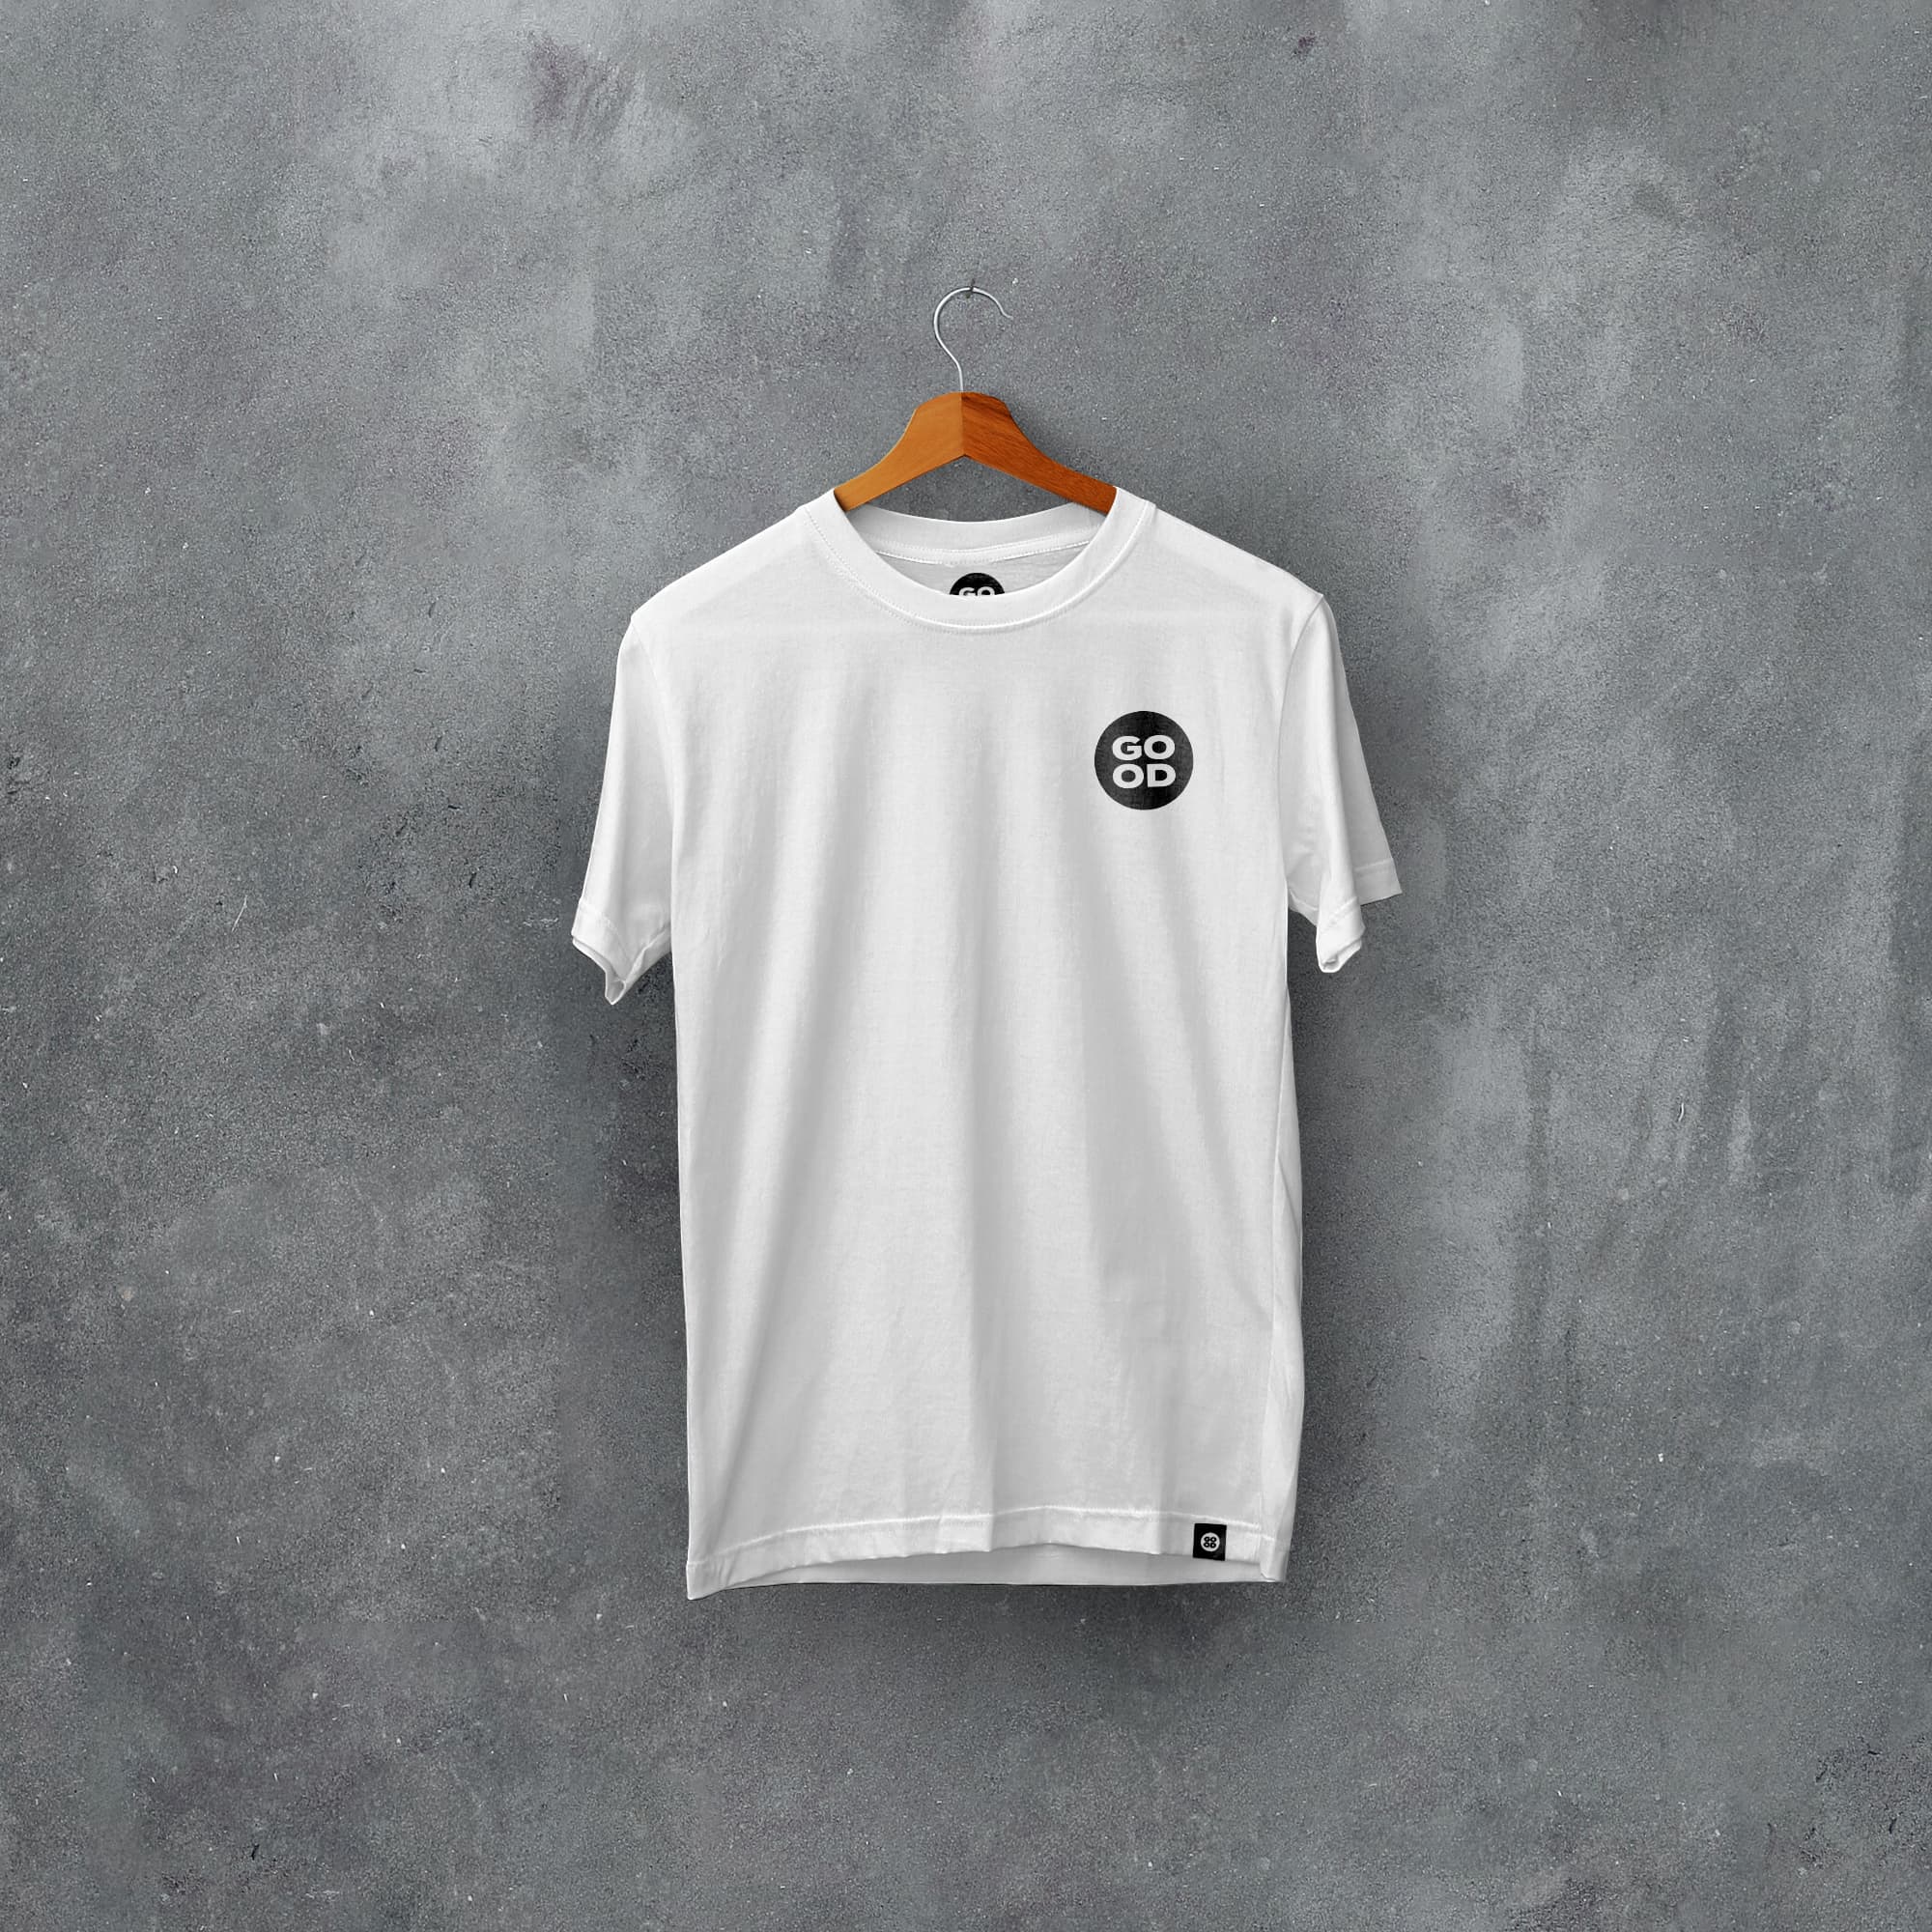 East Fife Classic Kits Football T-Shirt